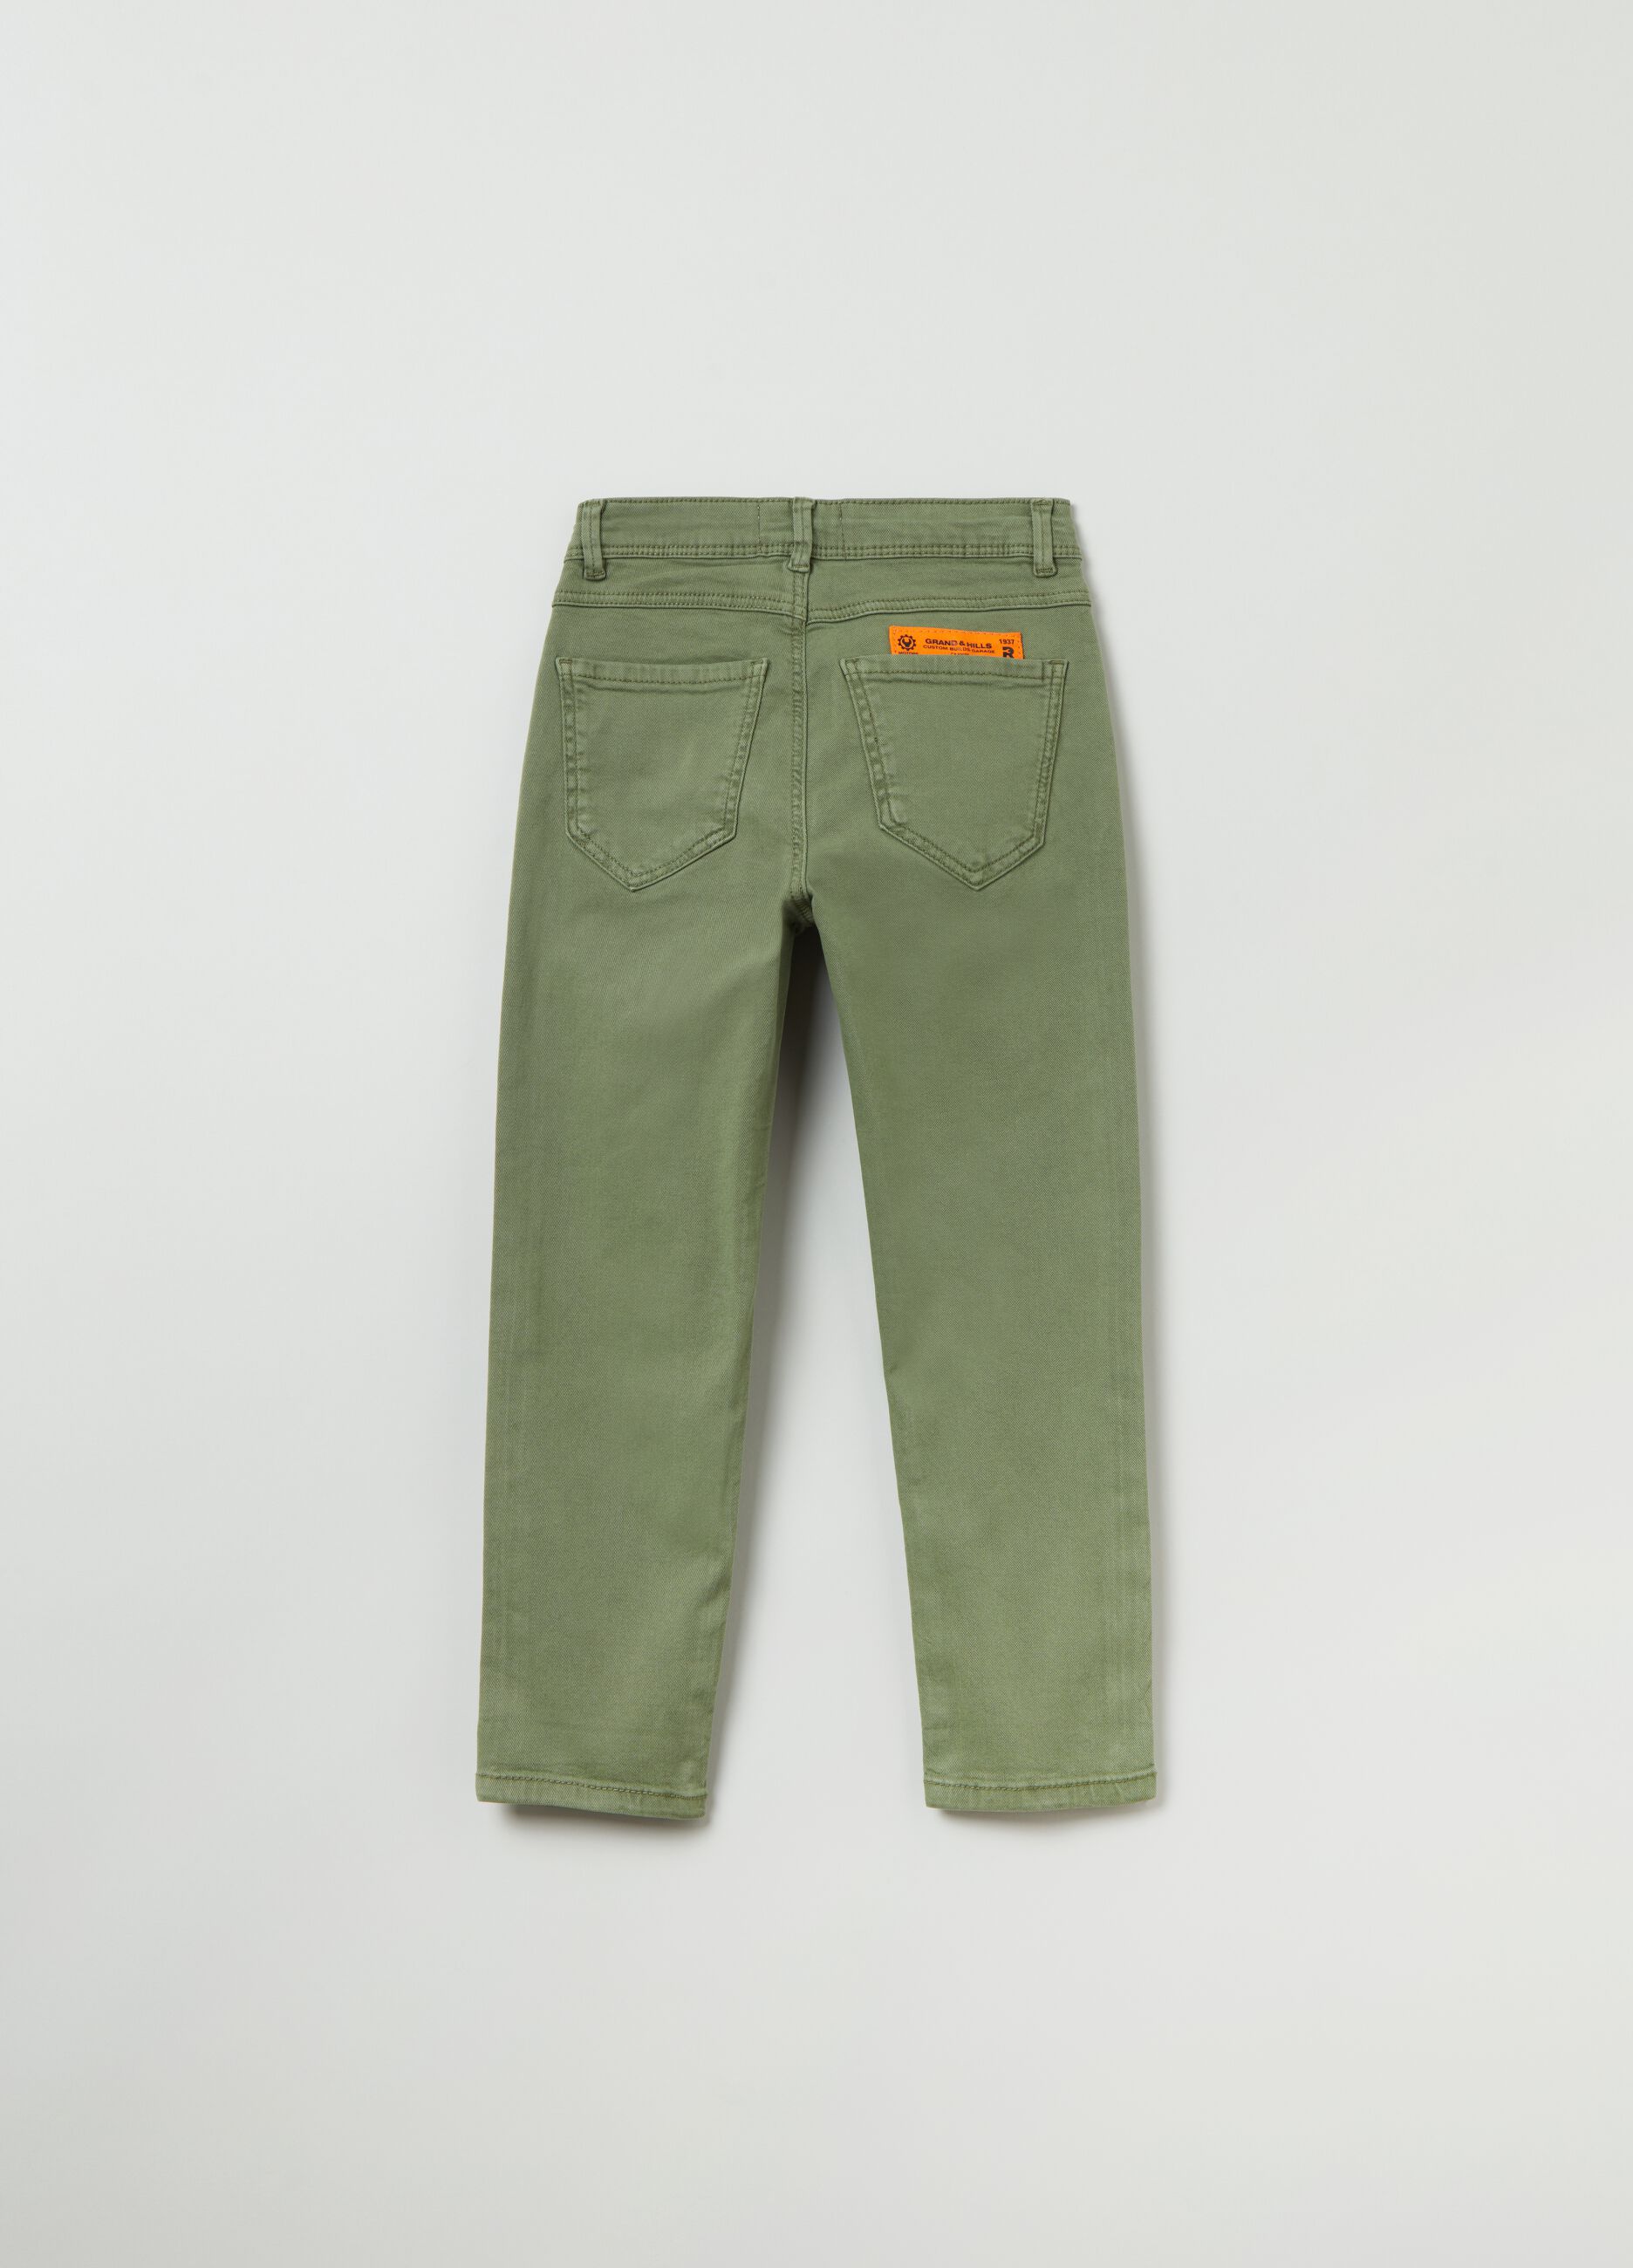 Grand& Hills 5-Pocket trousers